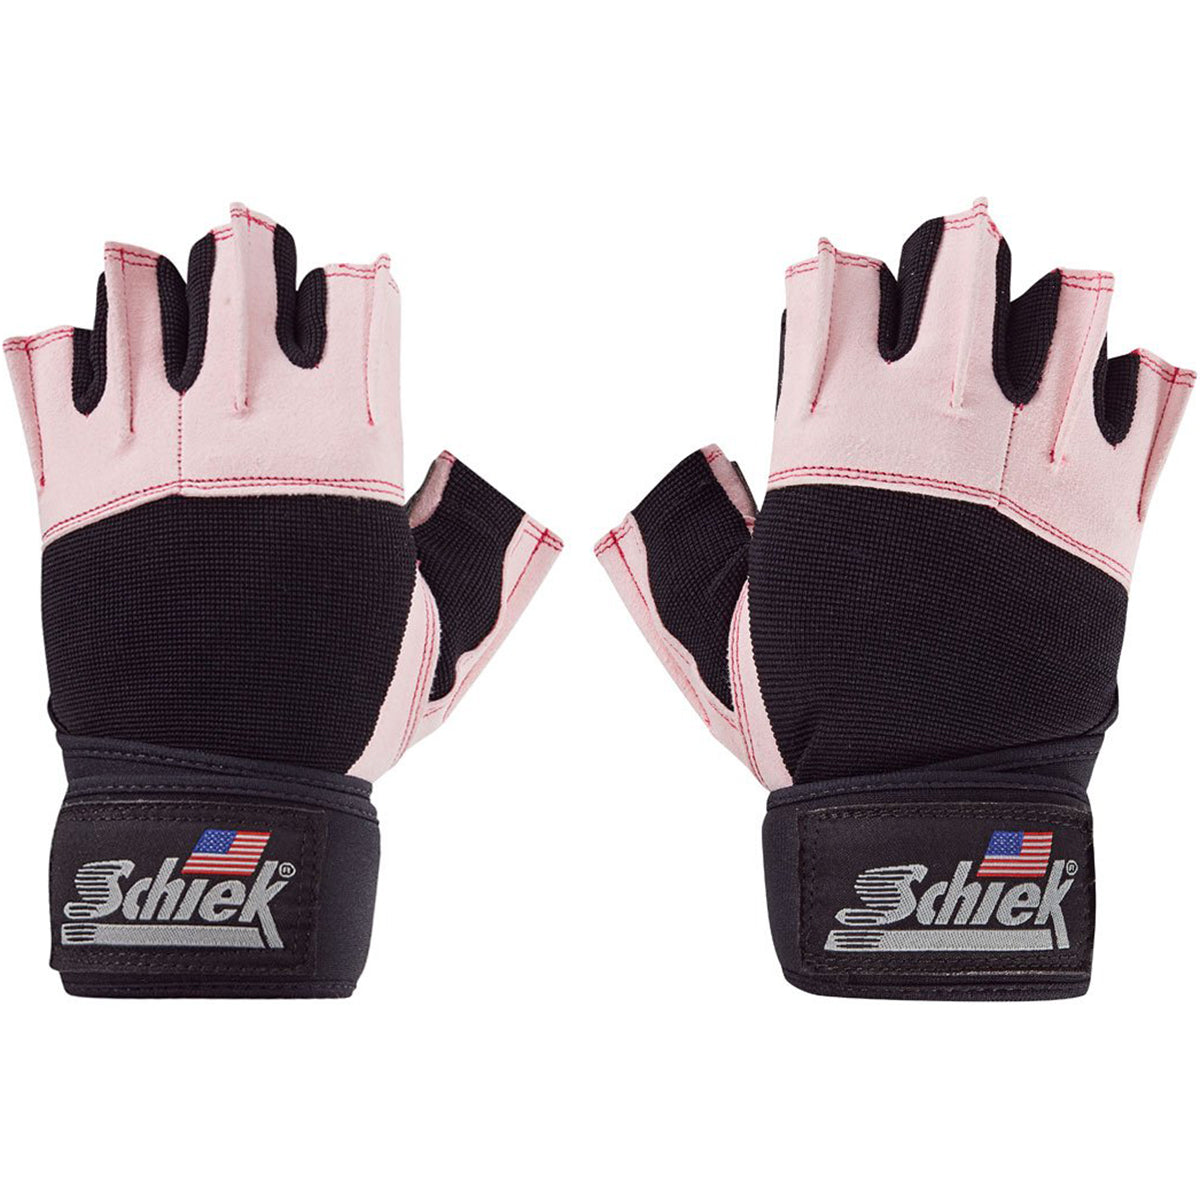 Schiek Sports Platinum 3/4 Finger Wrist Wrap Lifting Gloves - Pink/Black Schiek Sports